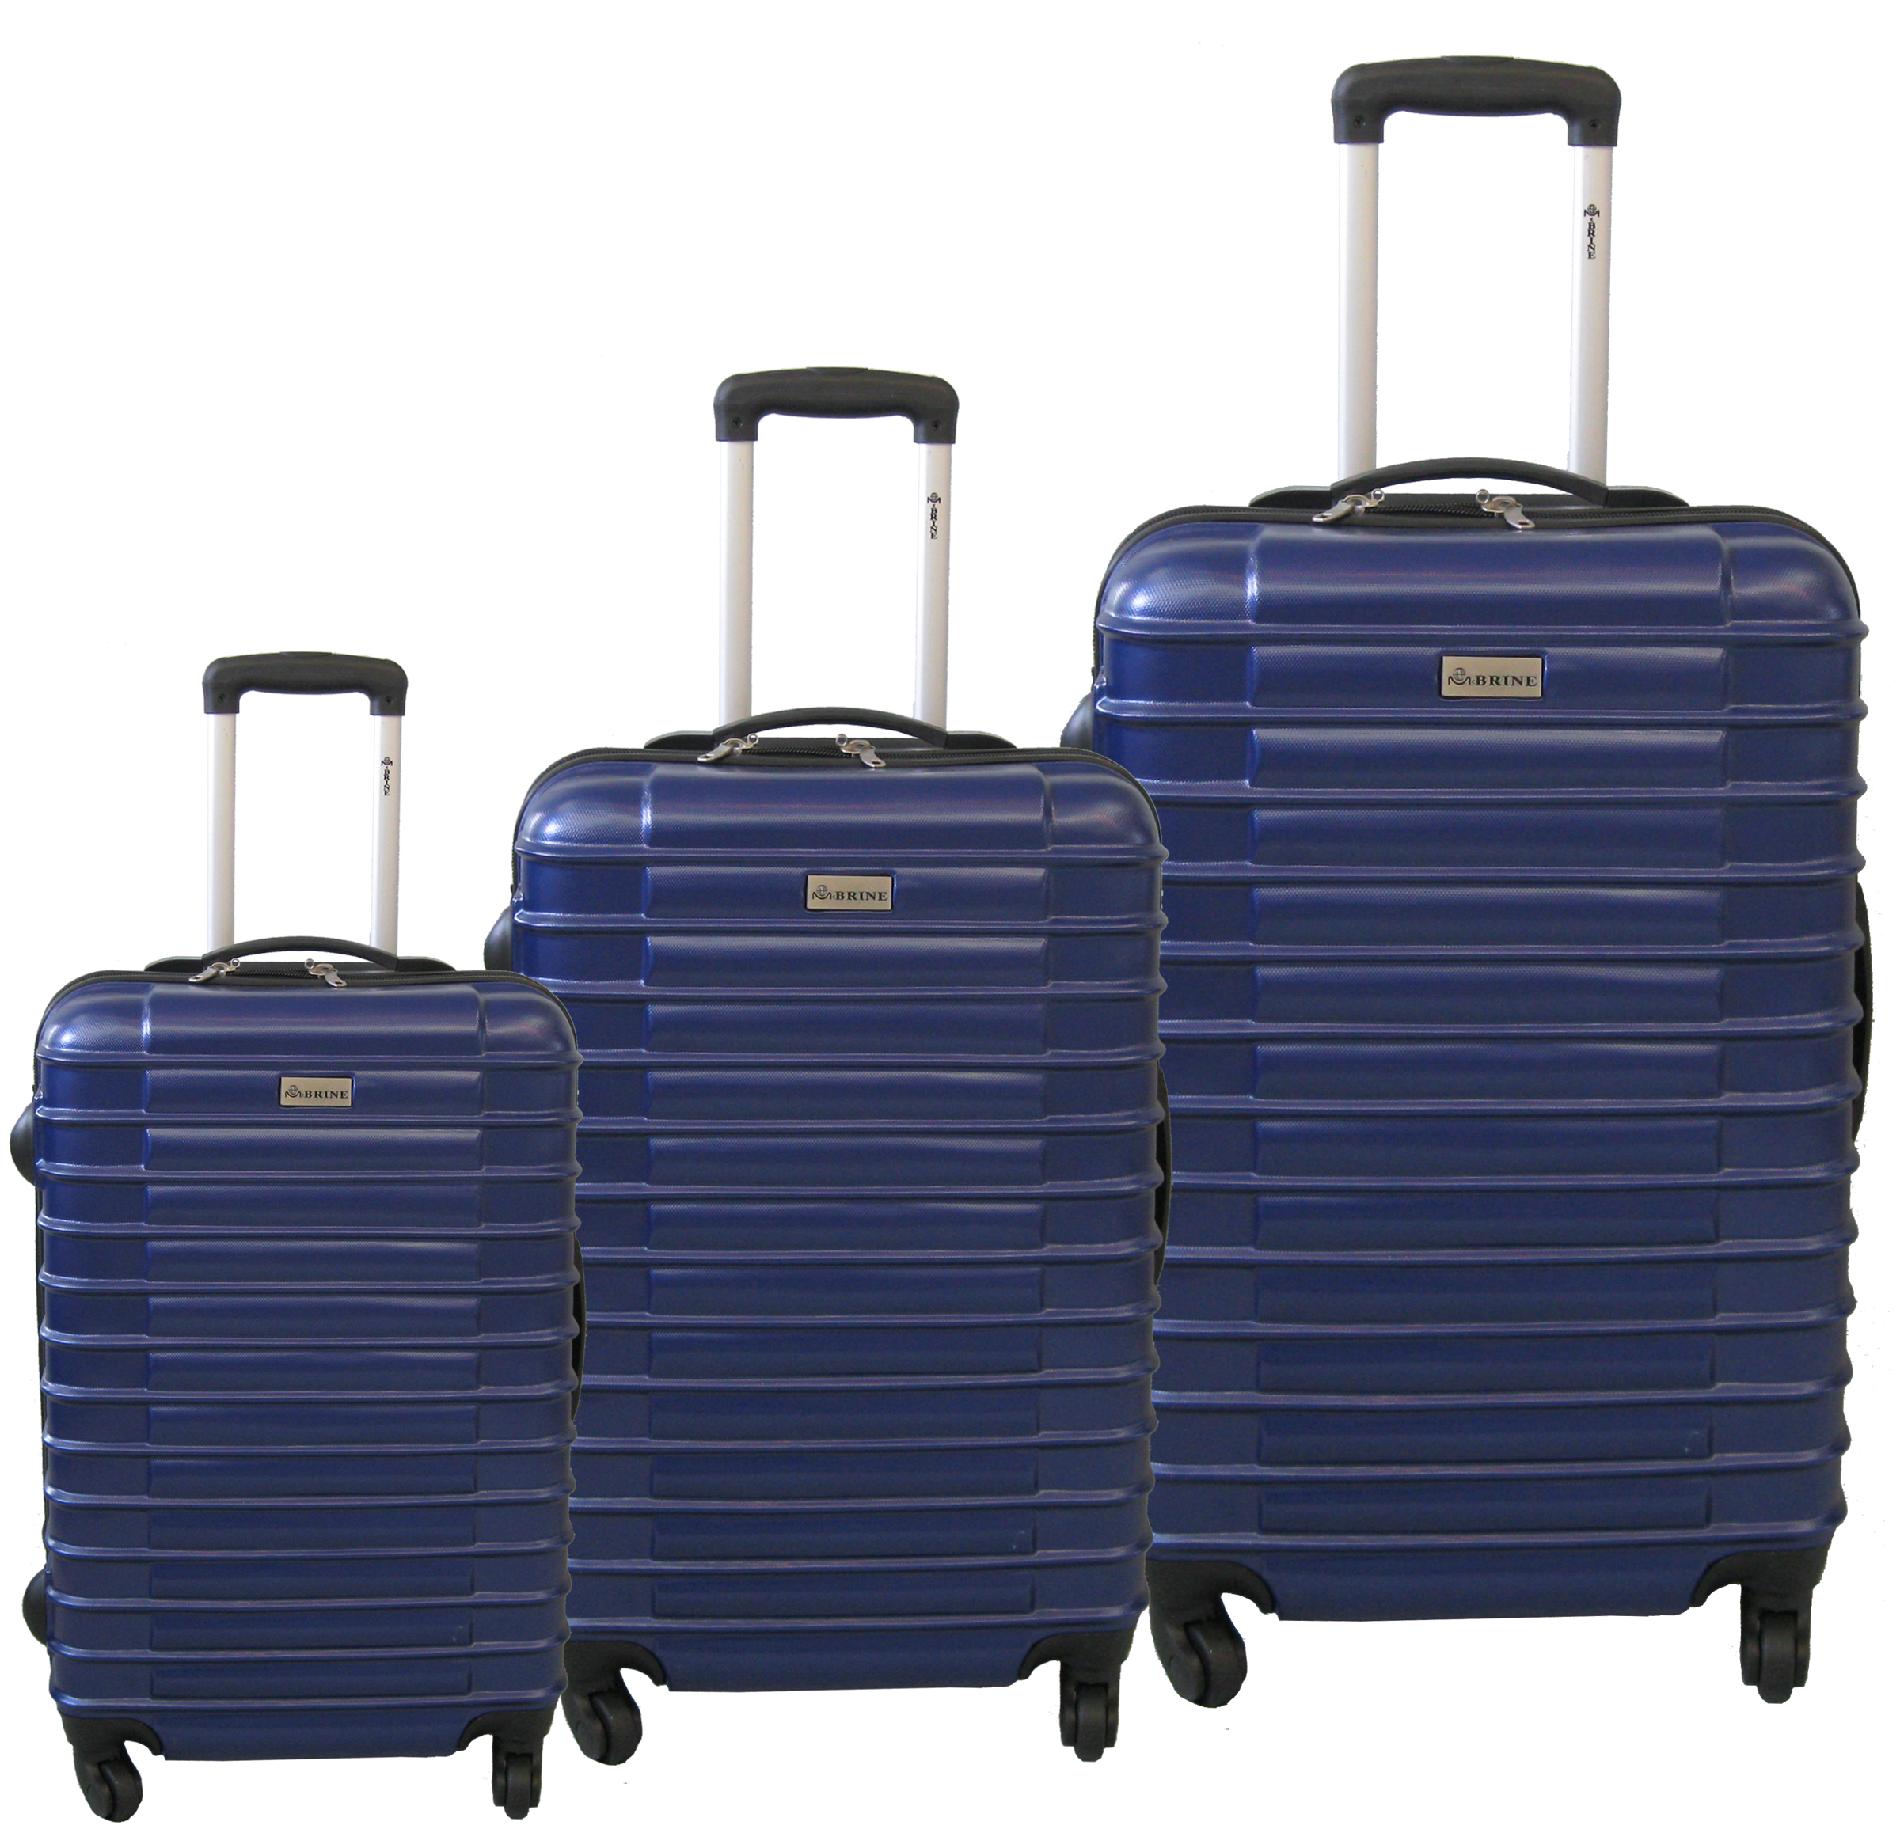 McBRINE Light weight Polycarbonate  3 pc luggage set  on swivel wheels